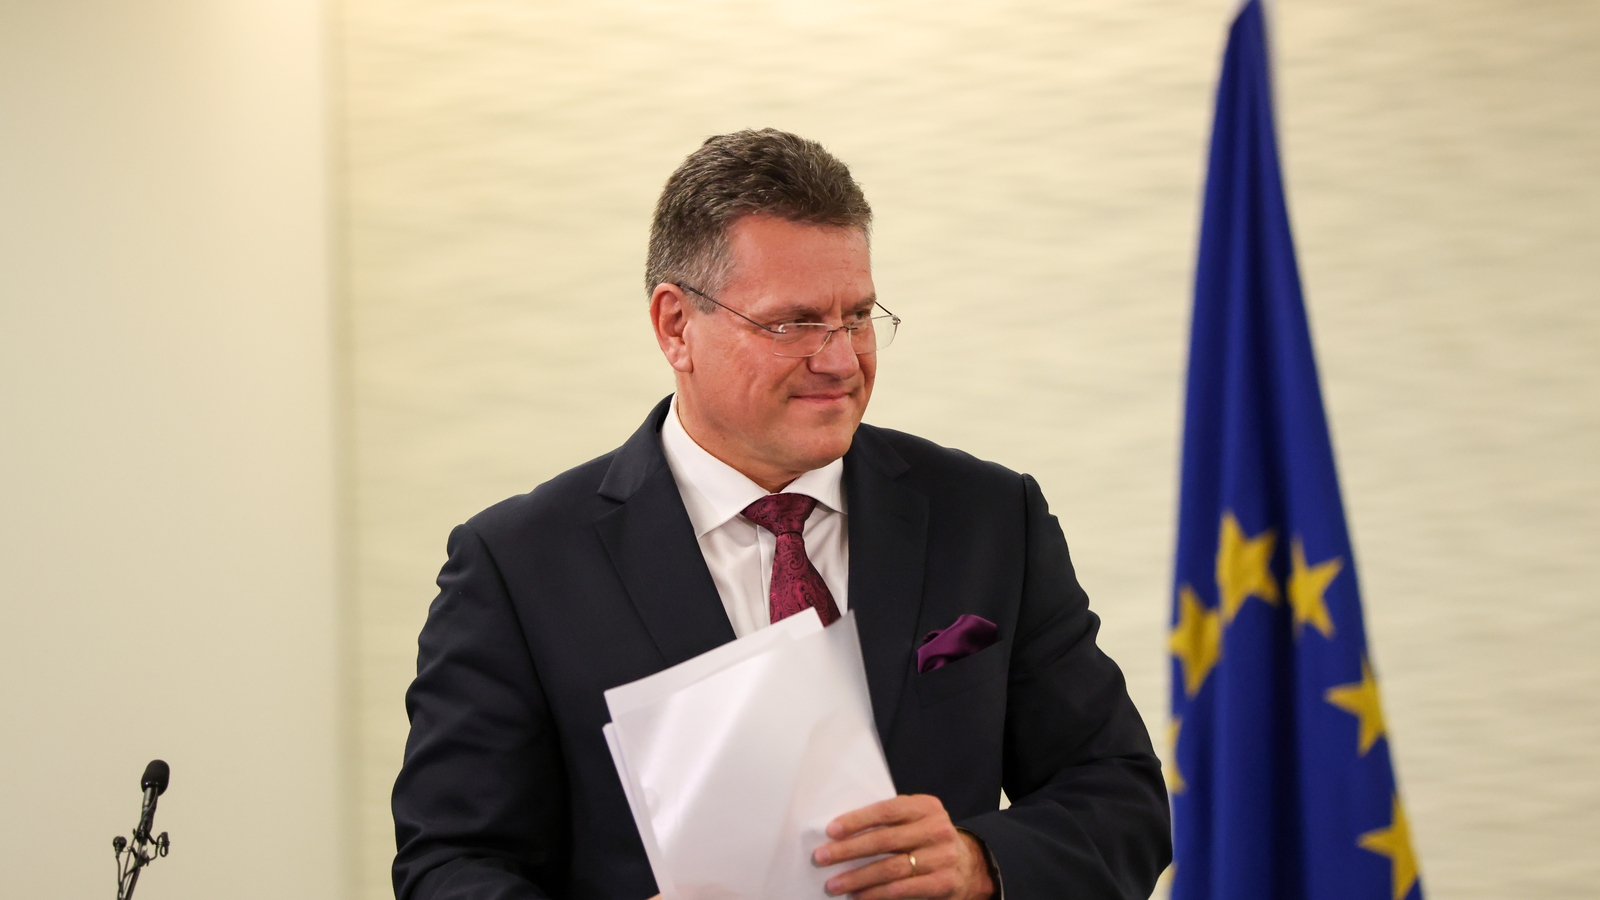 Šefčovič signals February end for NI Protocol talks